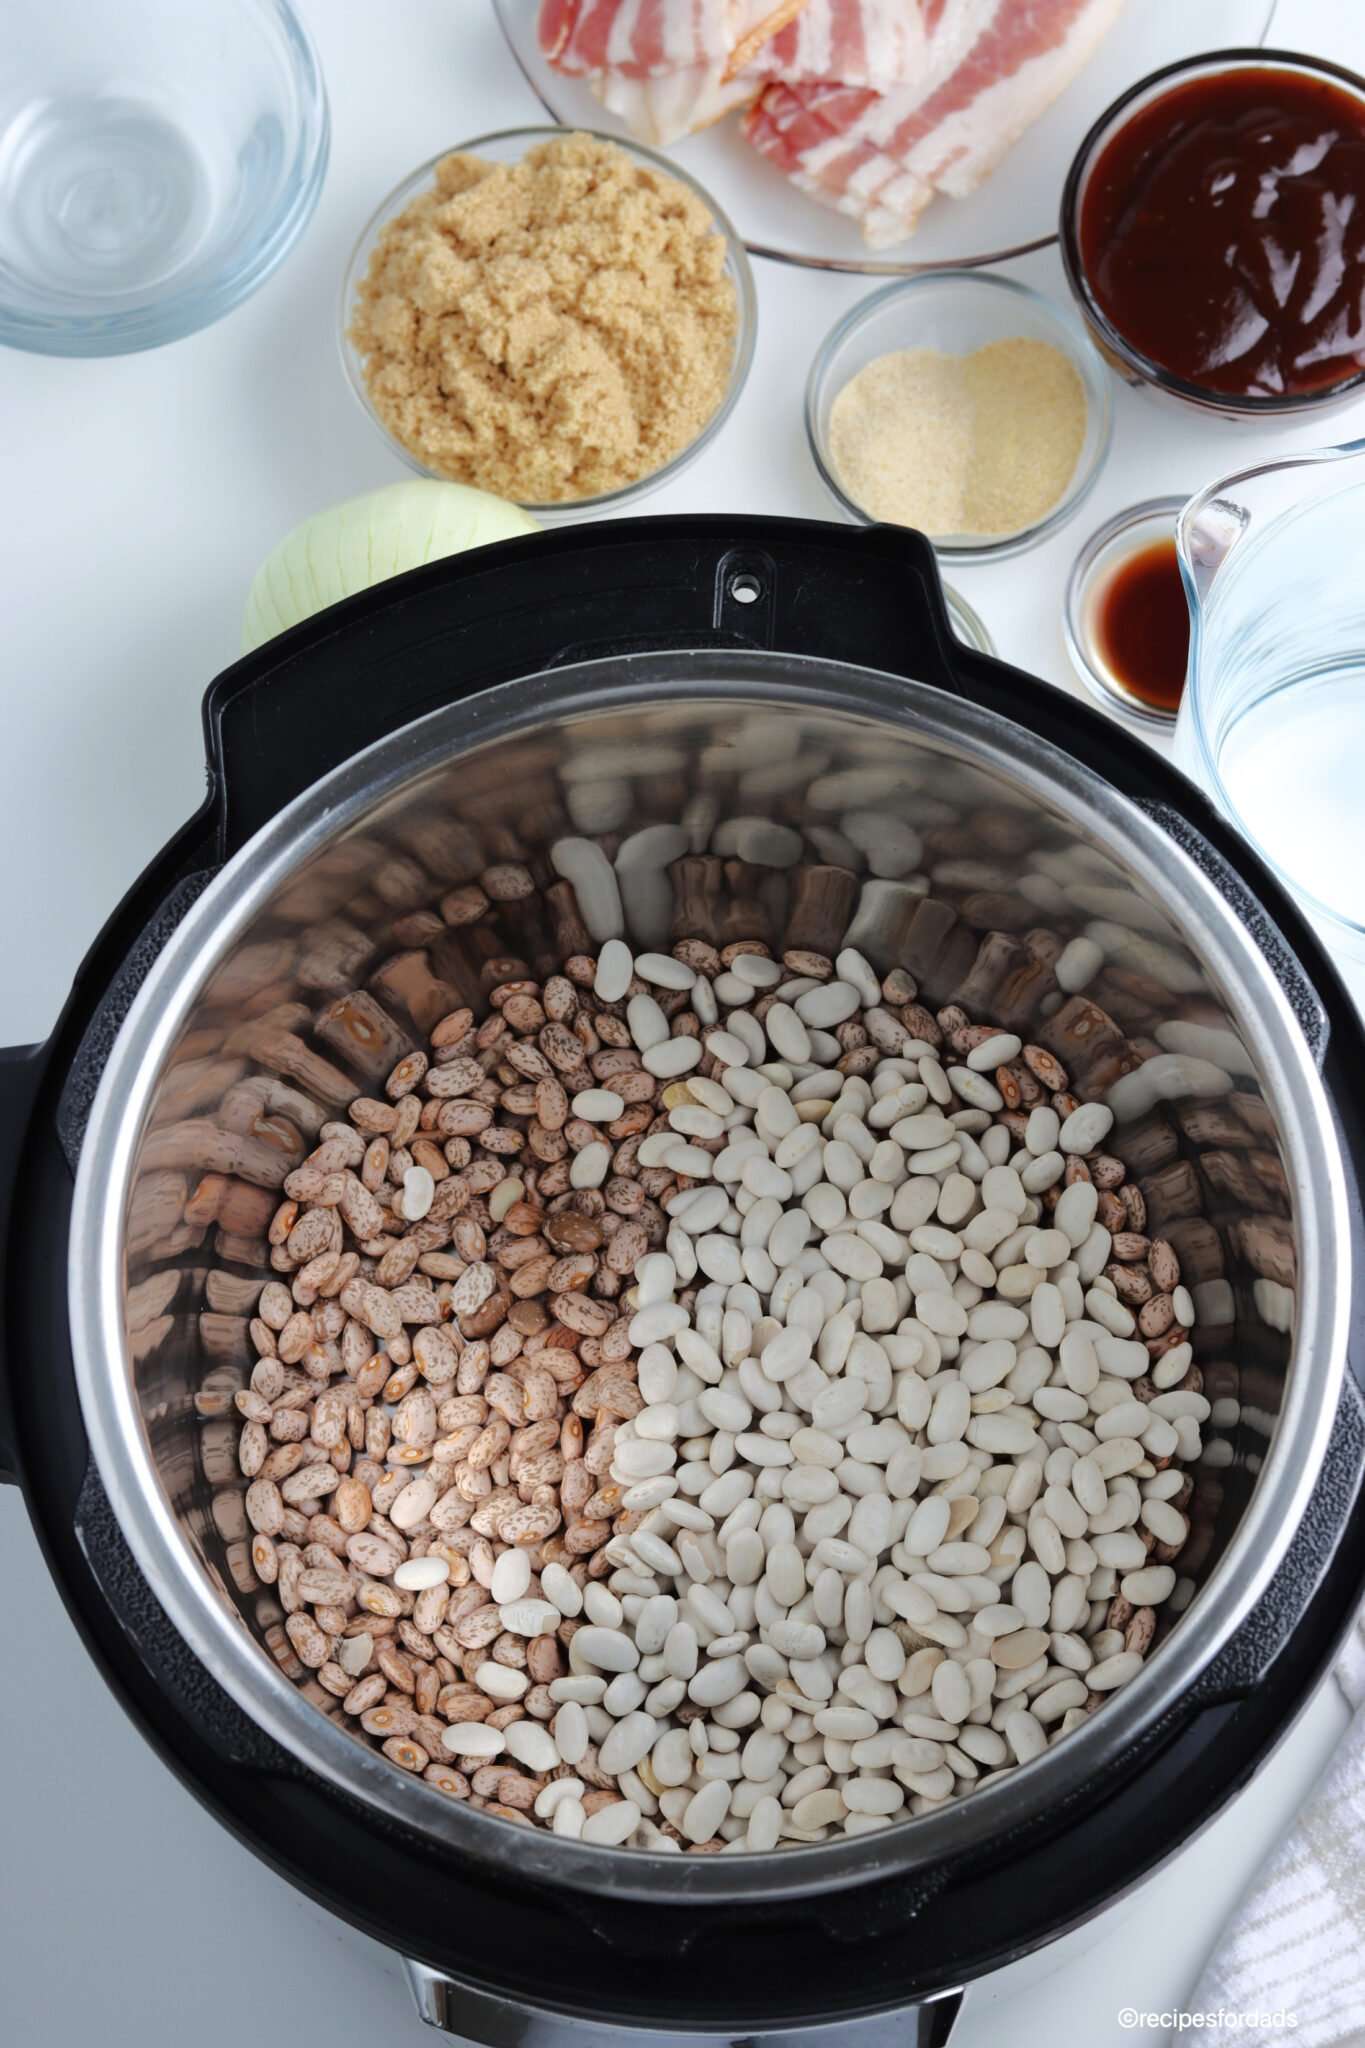 Easy Instant Pot Baked Beans